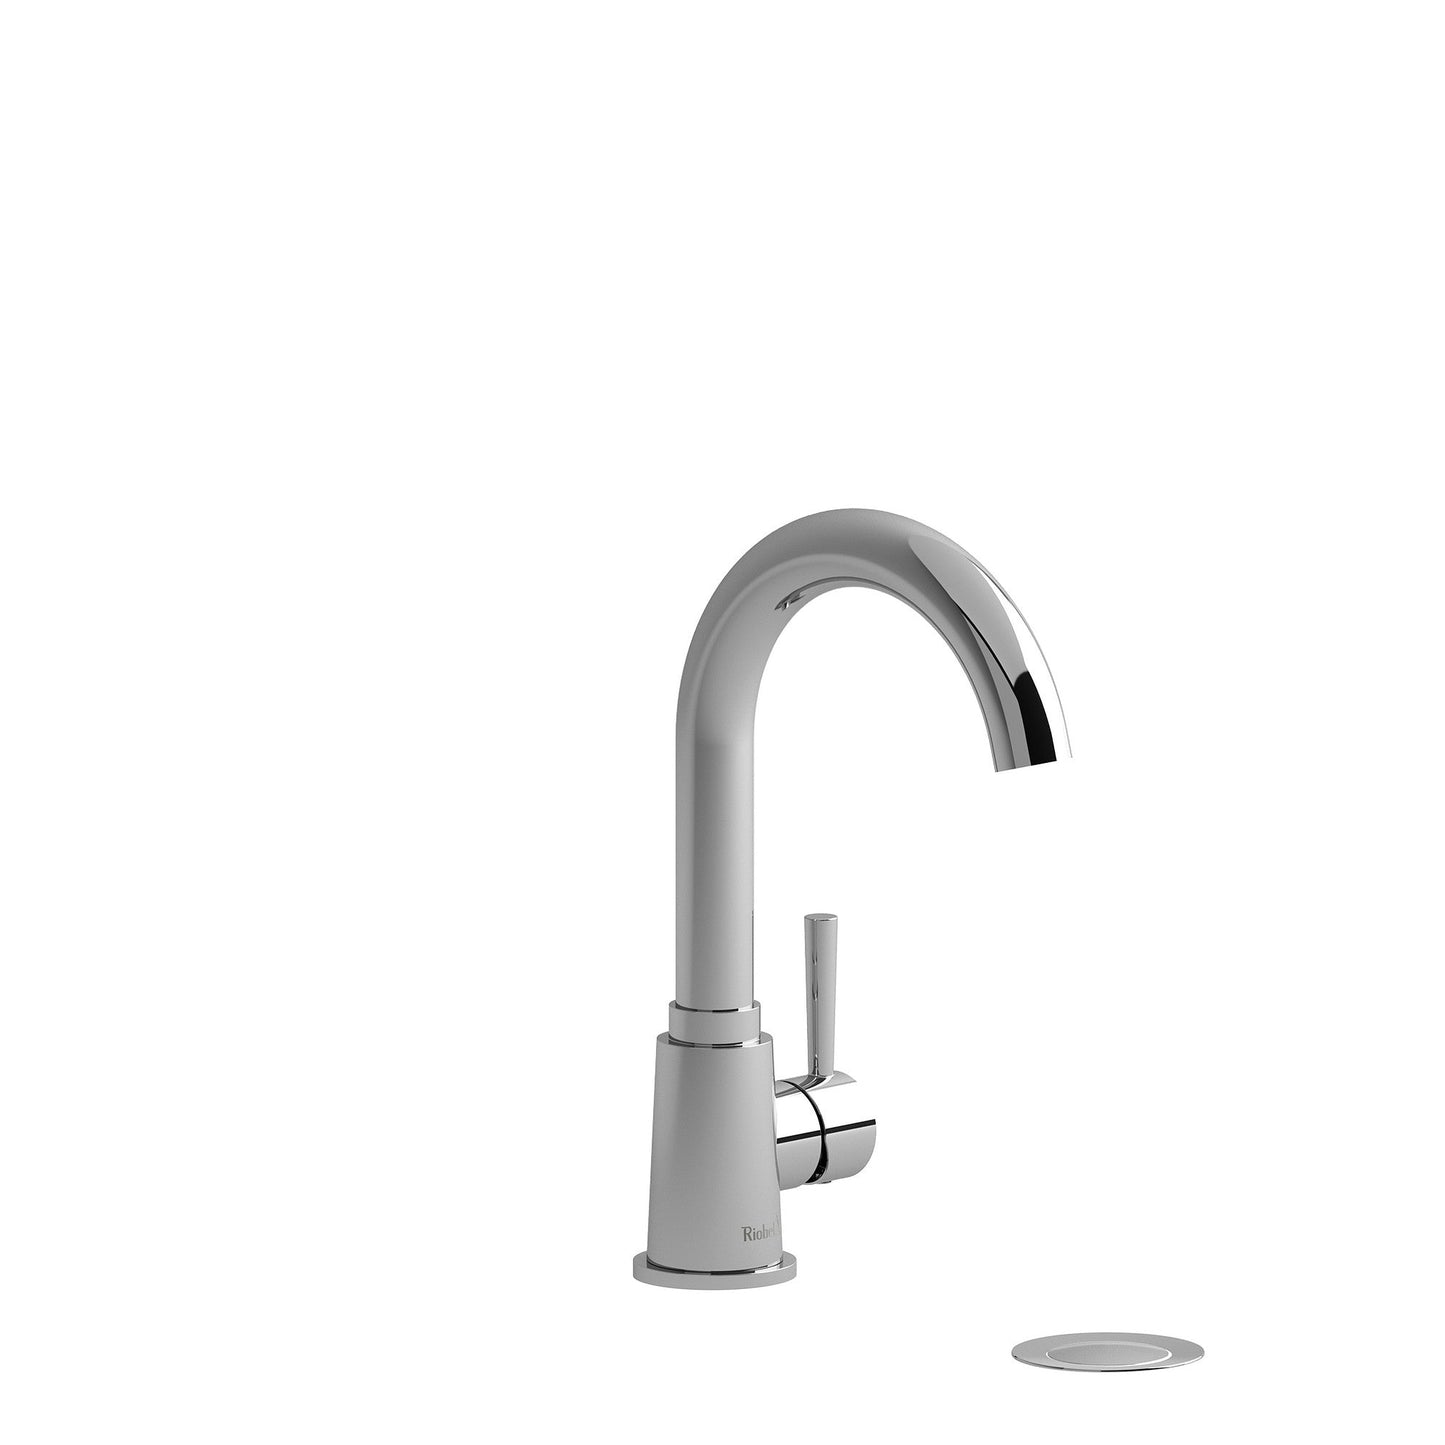 Riobel Pallace Single Hole Bathroom Faucet- Chrome